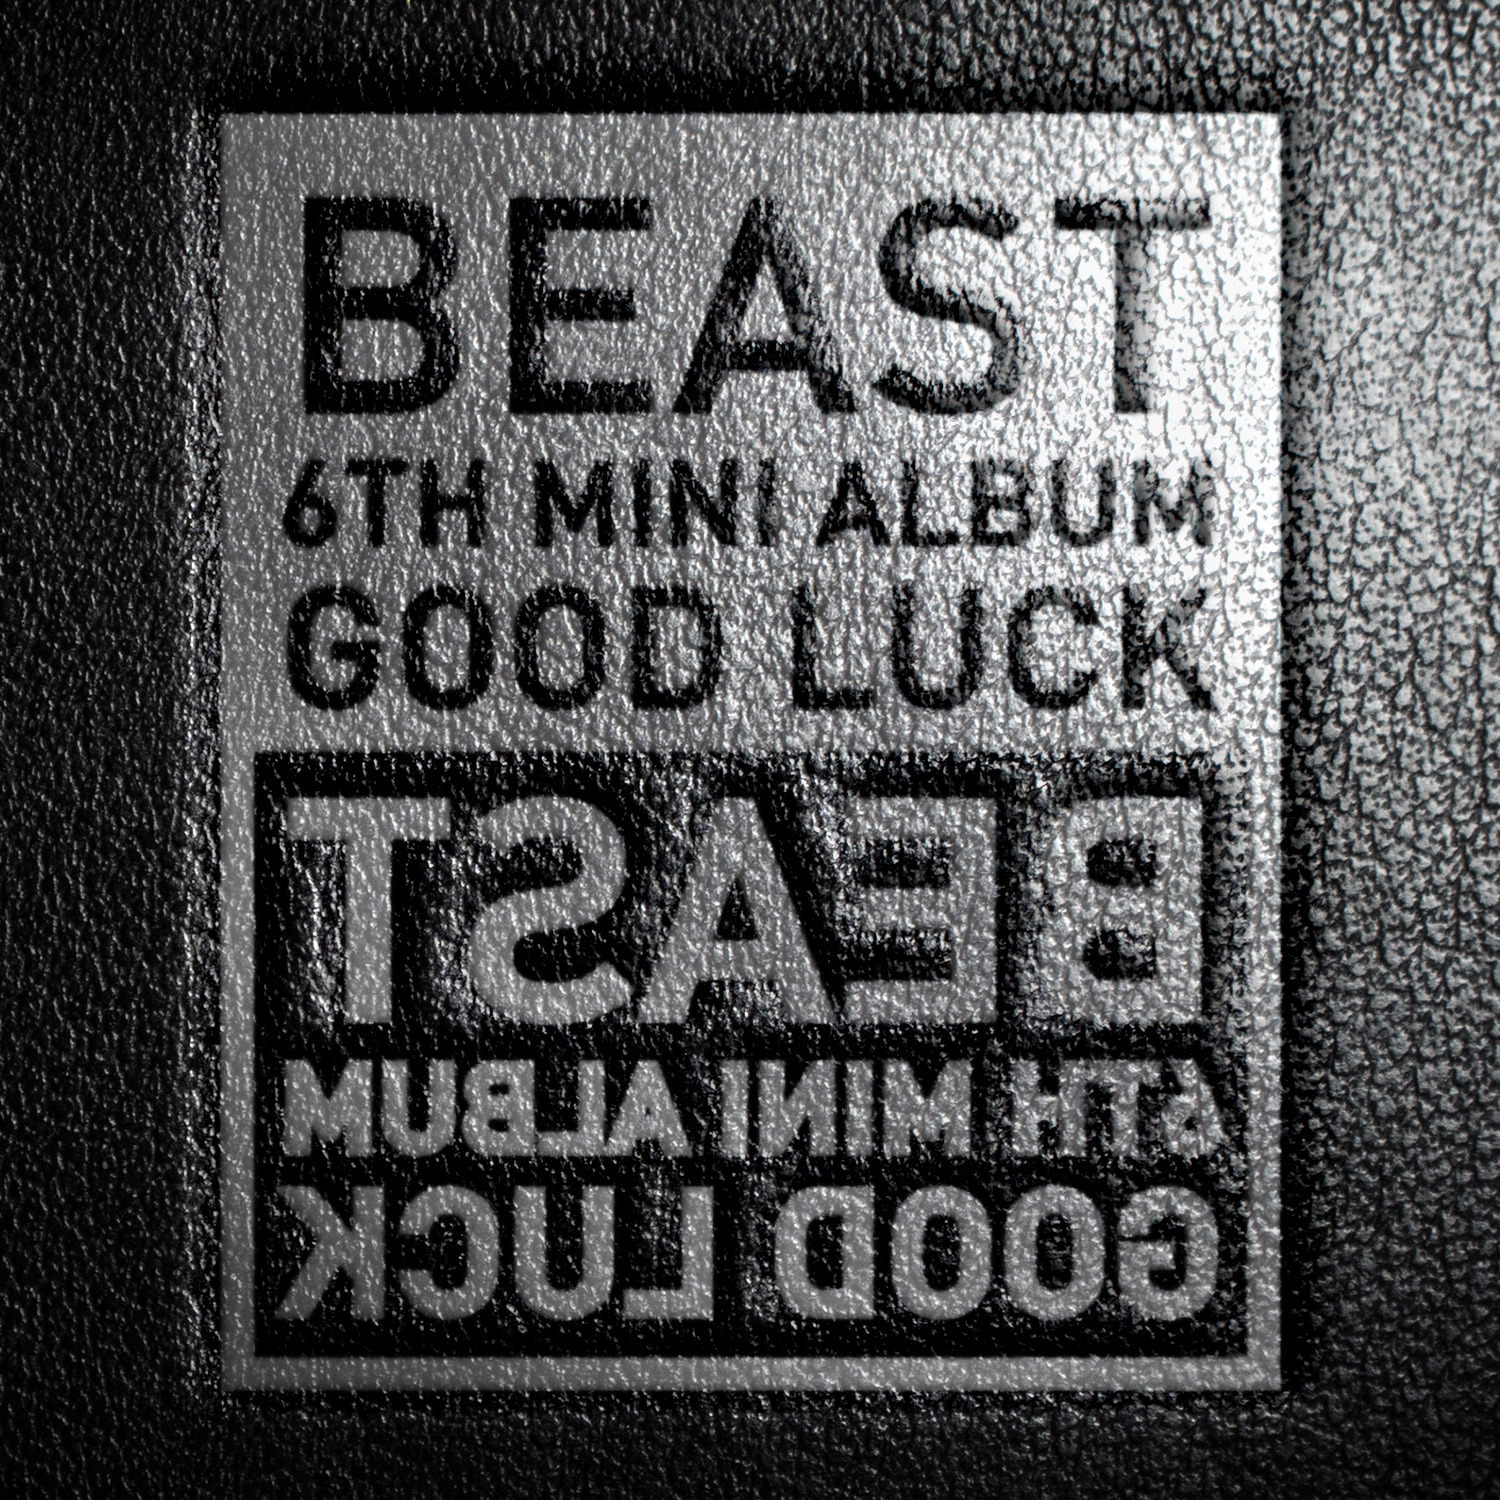 B2ST (Beast): 6ο mini album και MV του Good Luck | I say myeolchi // k ...